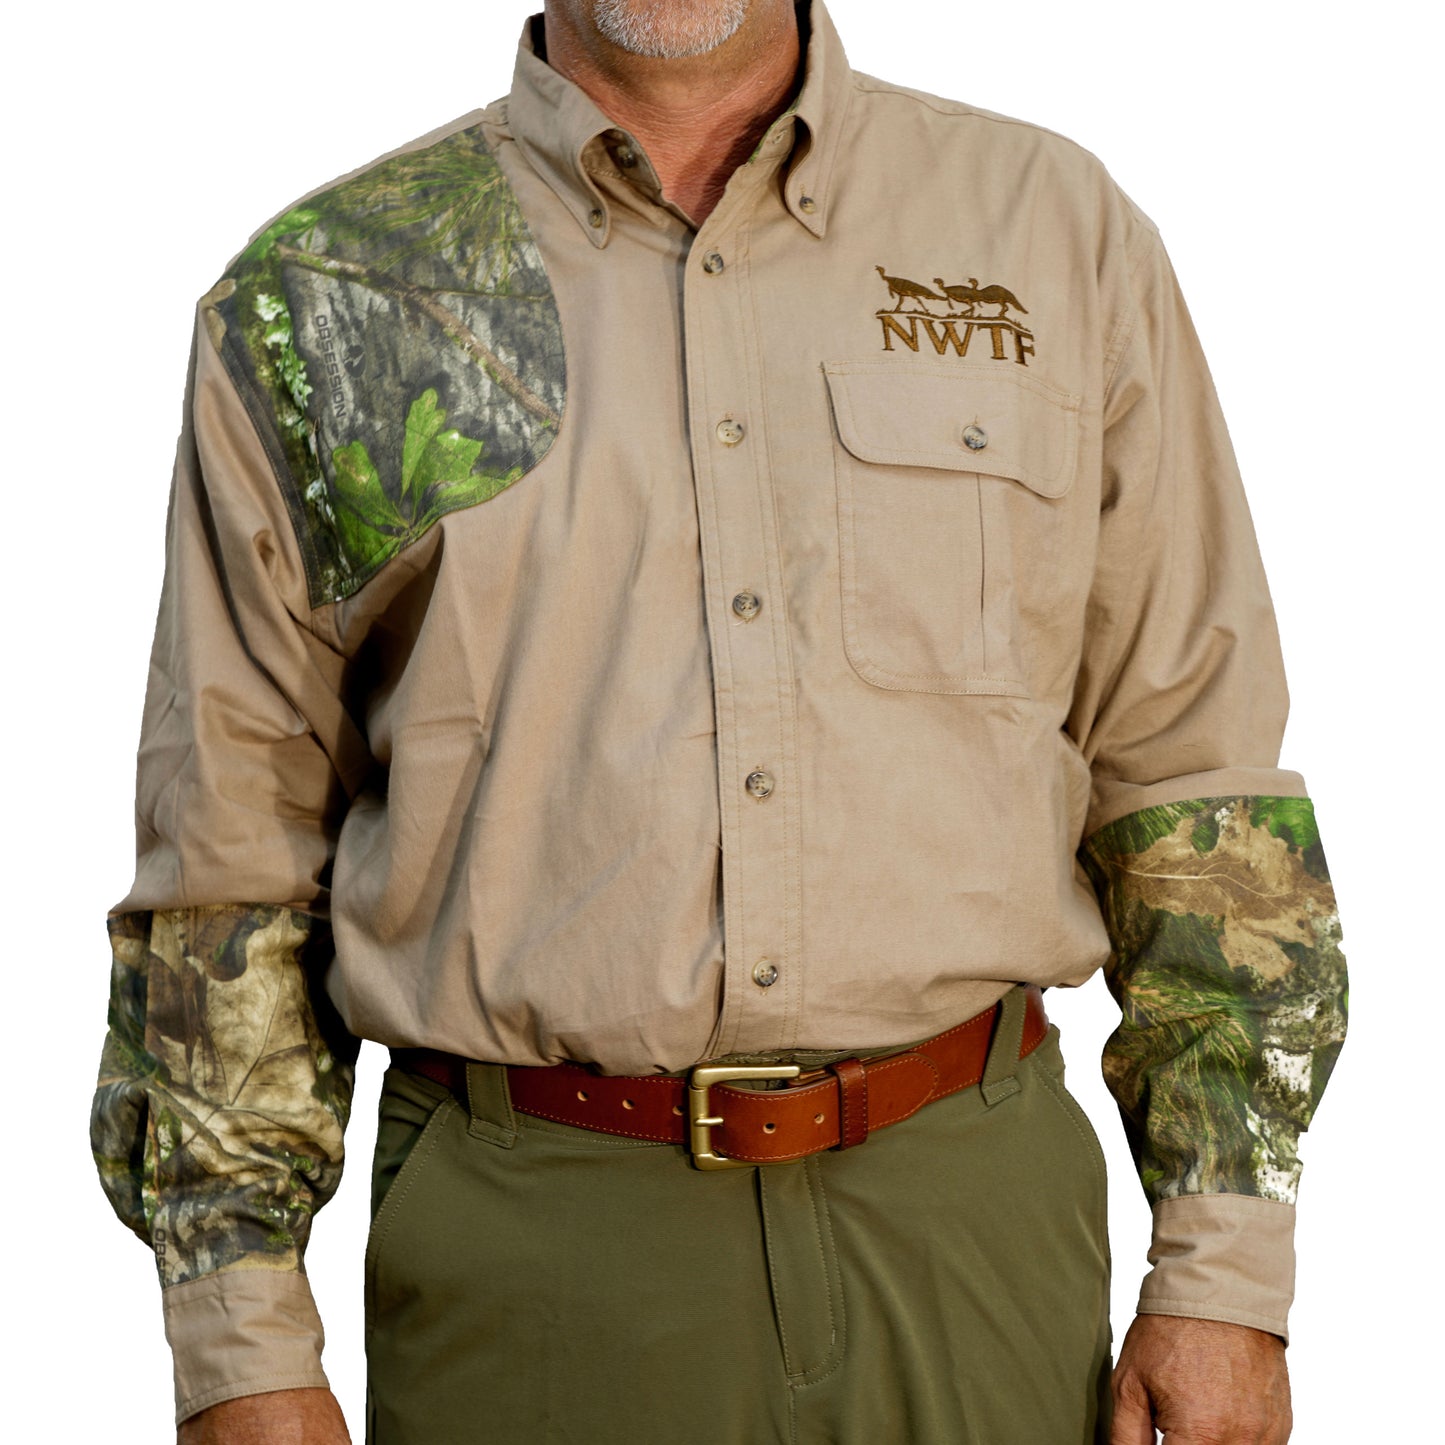 NWTF Long Sleeve Hunting Shirt